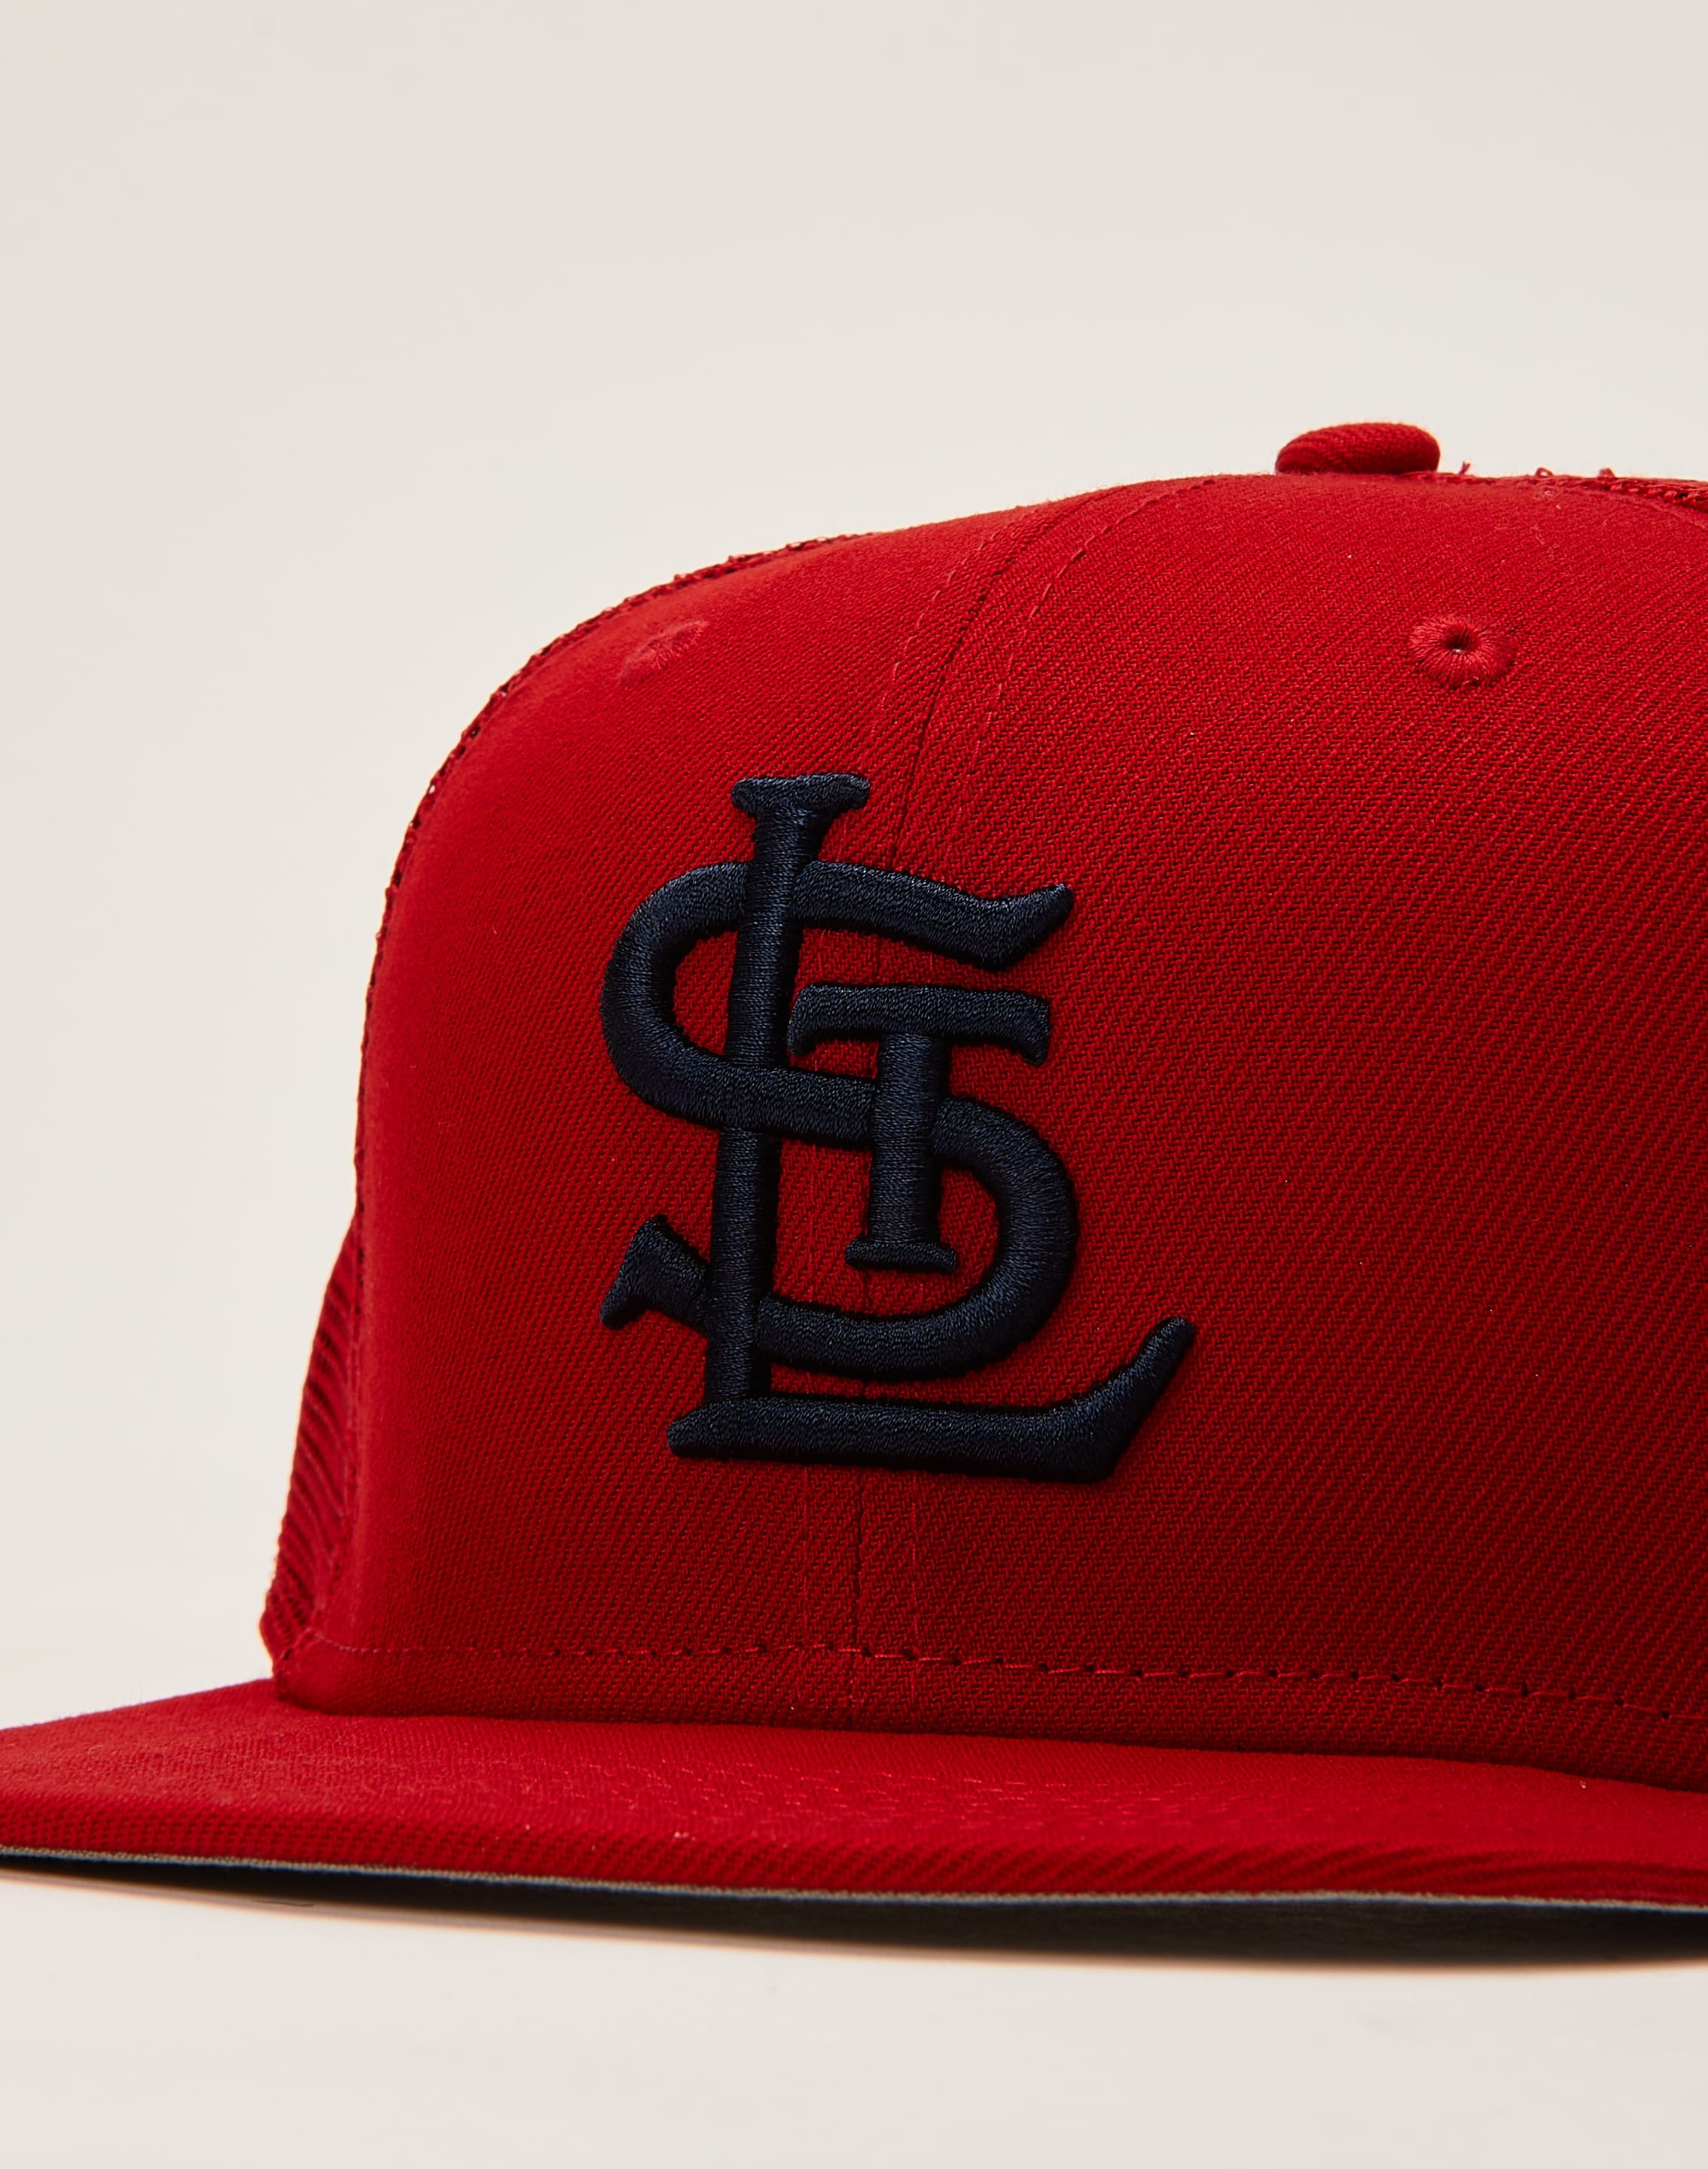 St. Louis Cardinals New Era Sky Blue/Red Bill 9FIFTY Adjustable Snapback Hat.  #St.louis #cardinals #MLB⁠ .⁠ .⁠ .⁠ .⁠ .⁠ .⁠ .⁠ .⁠ .⁠ #love…